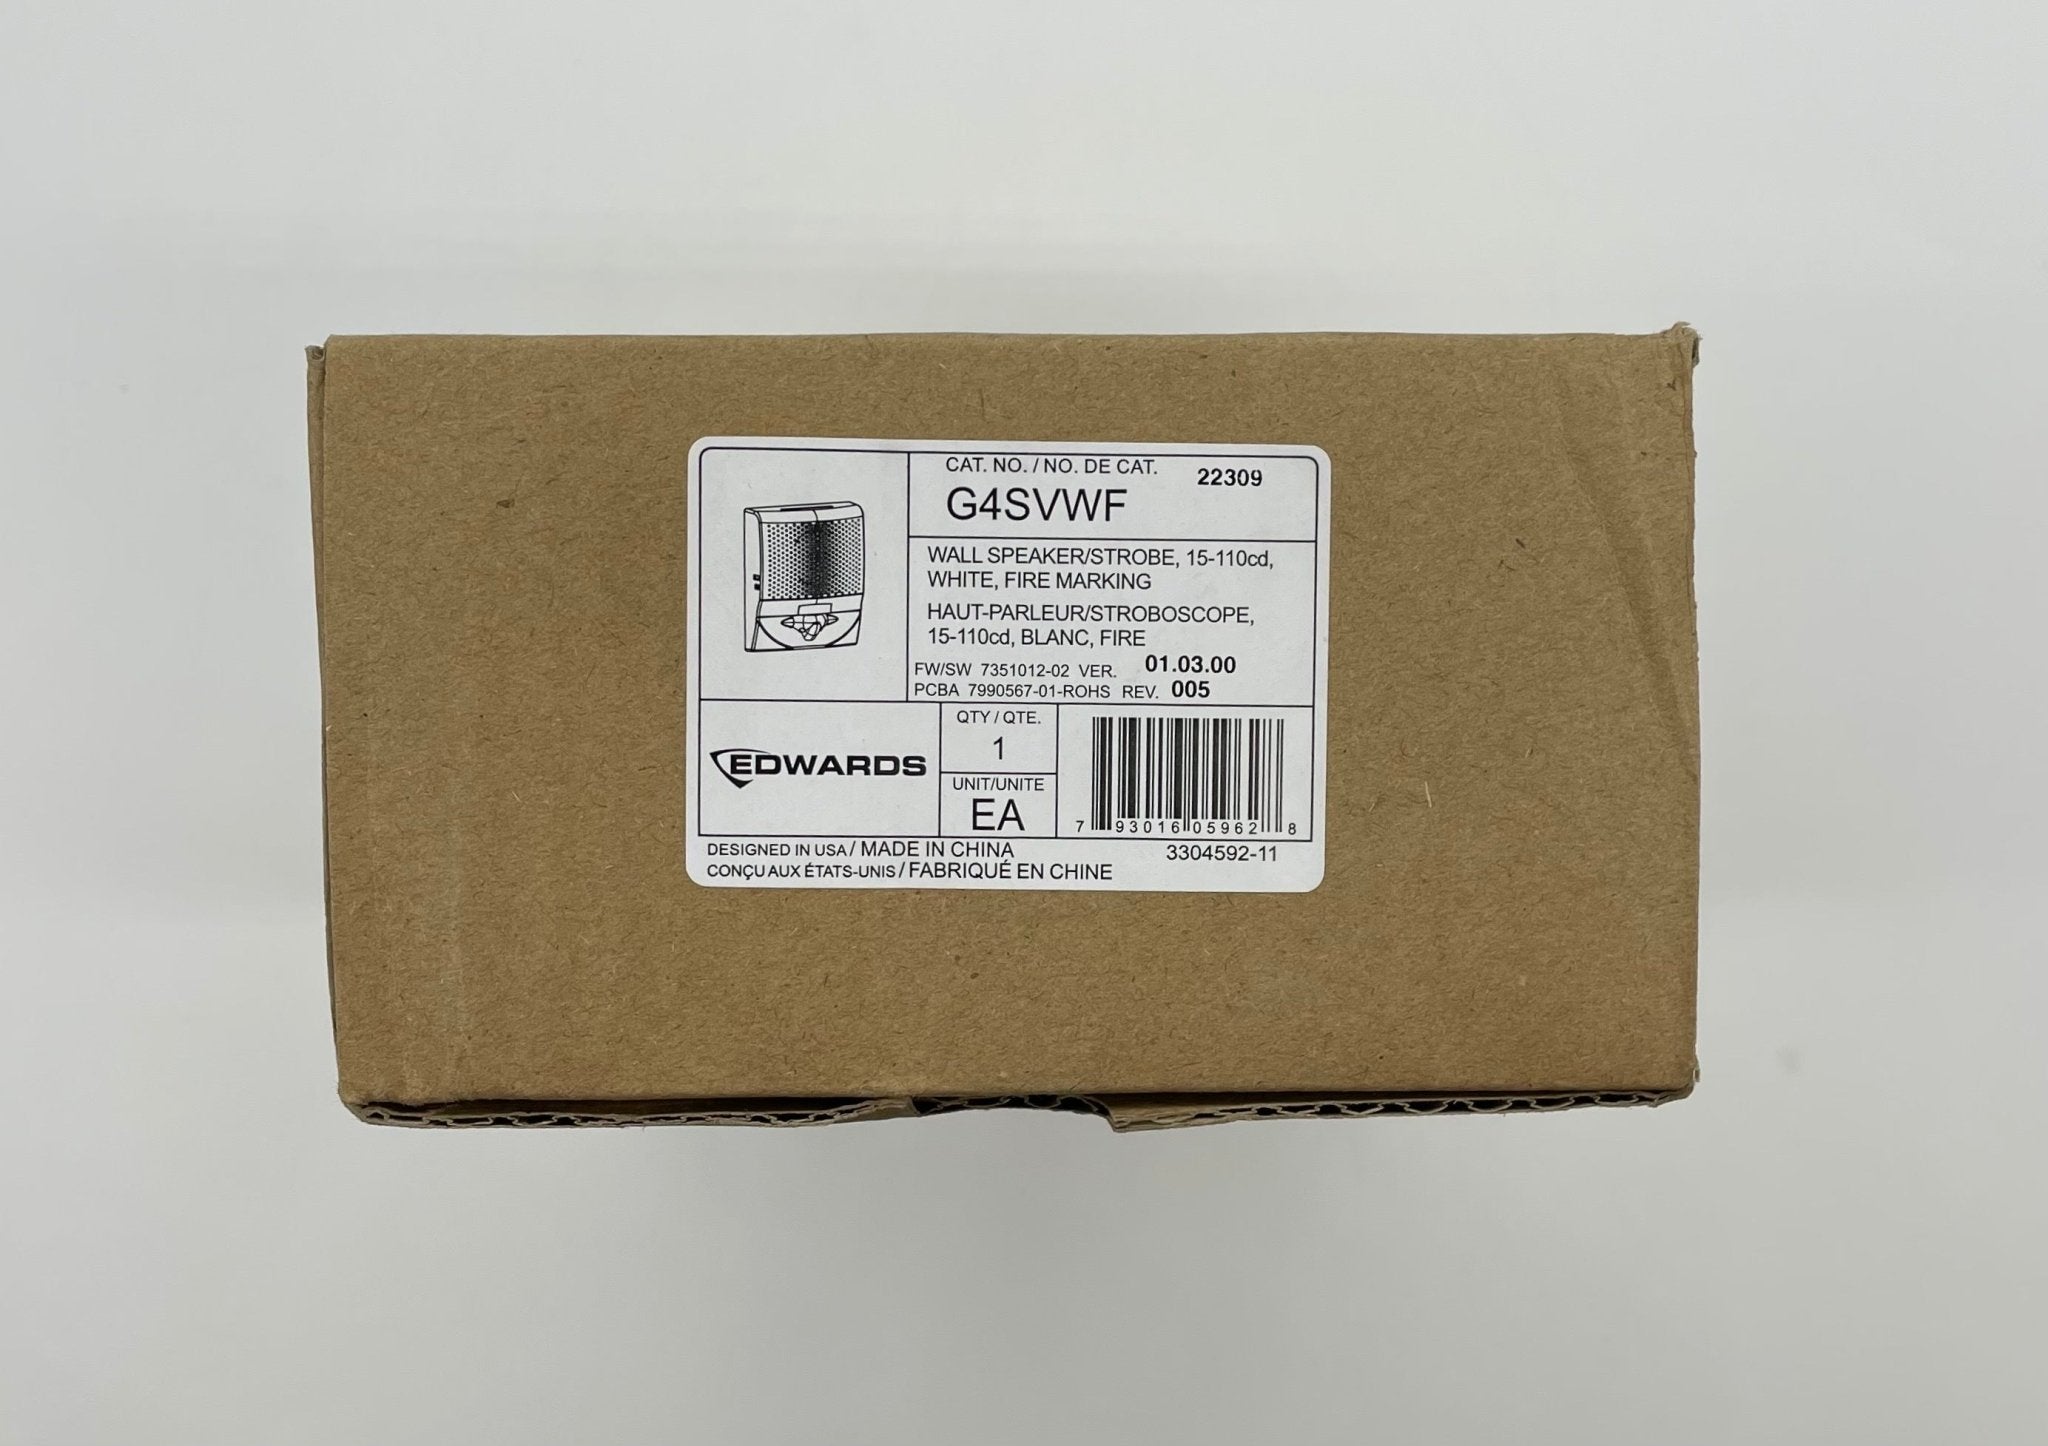 Edwards G4SVWF - The Fire Alarm Supplier